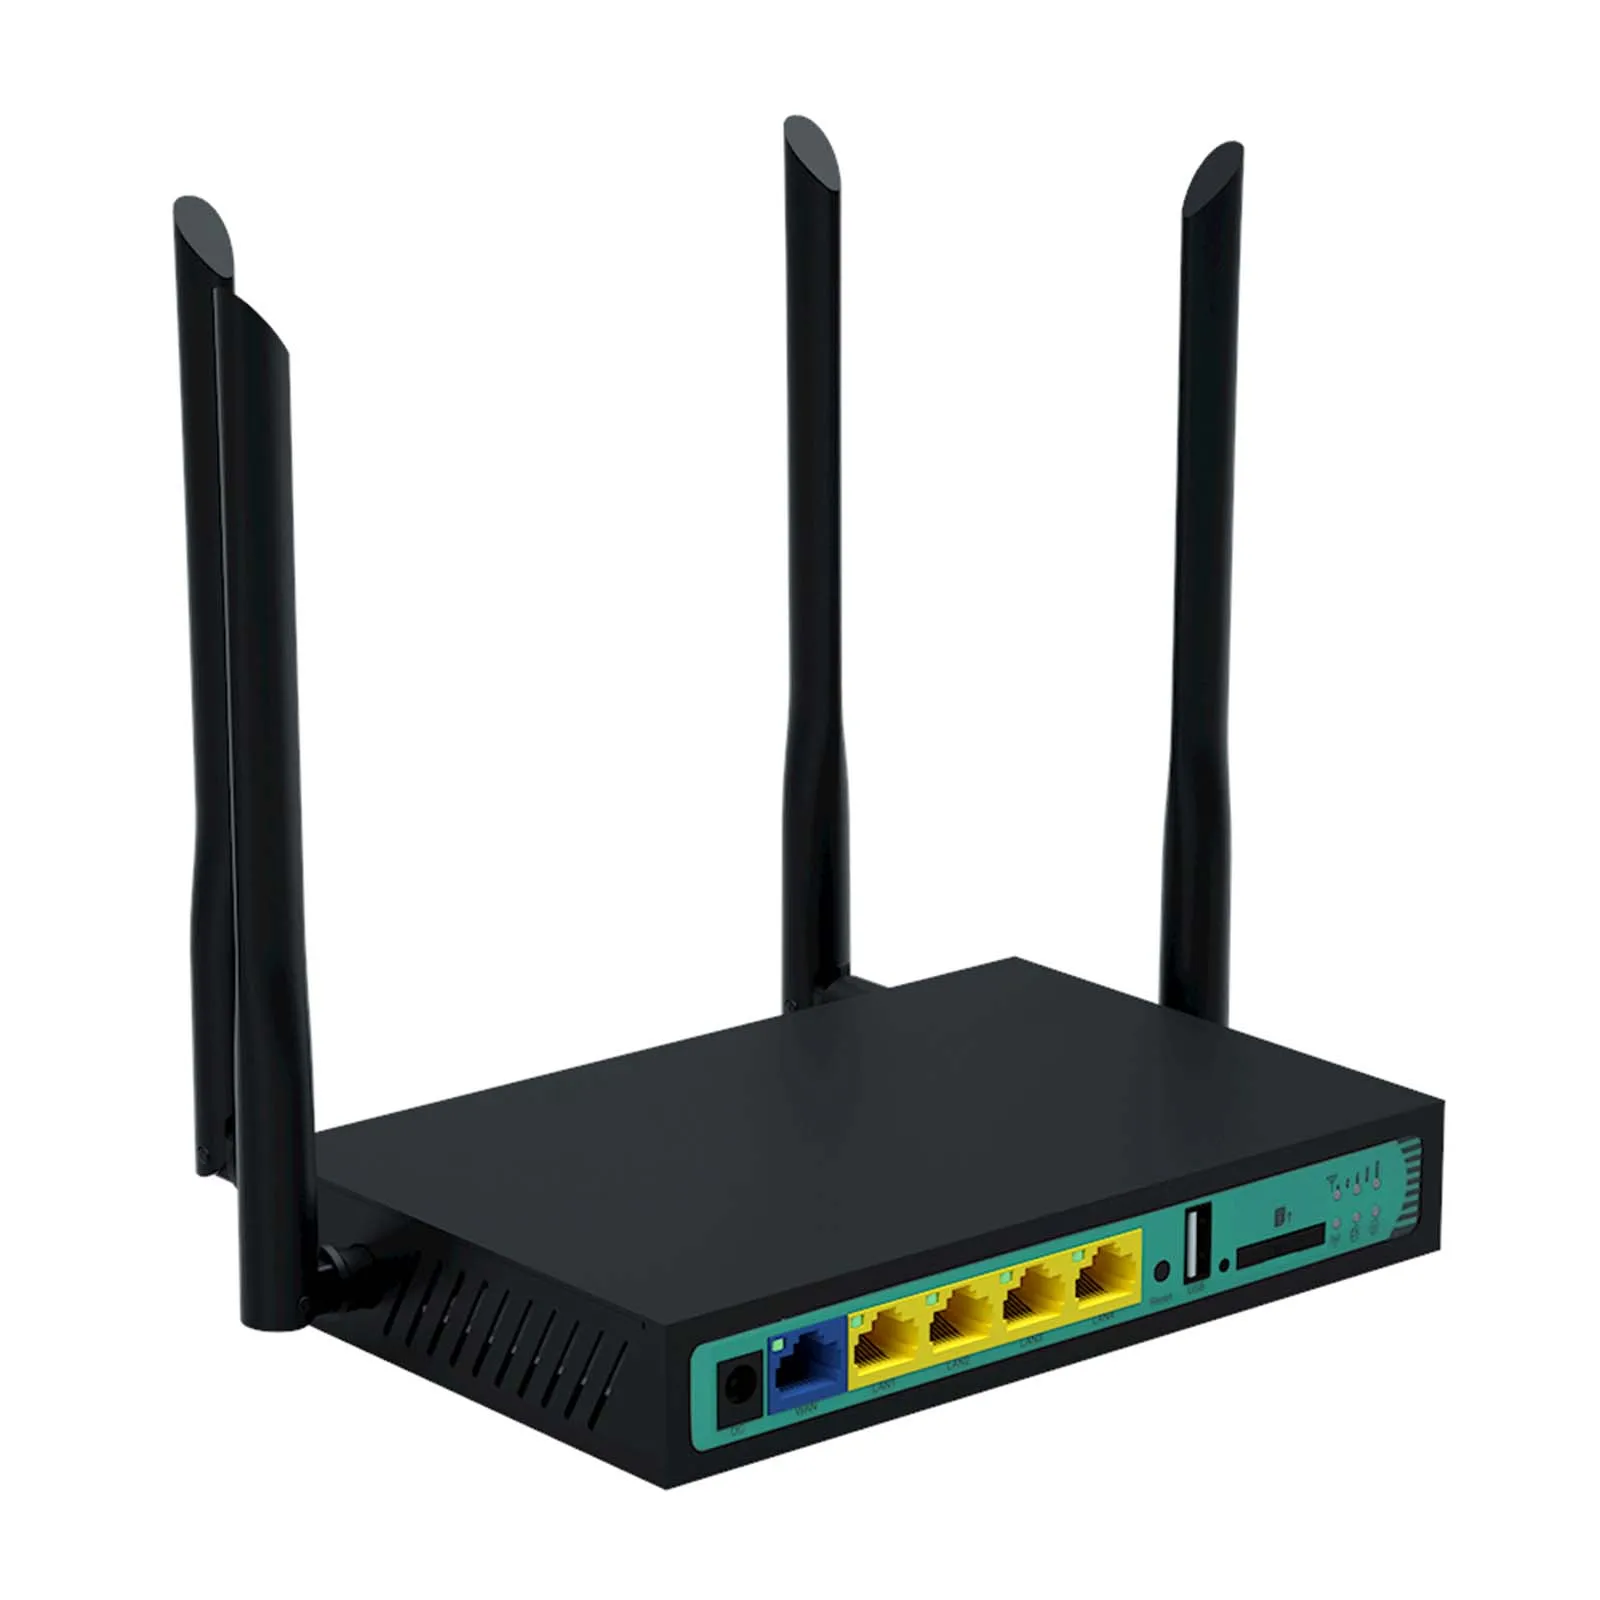 4G Wi-Fi маршрутизатор ZBT-WE2416 5 портовый маршрутизатор с sim-картой USB WAP2 802.11n/u/b/g 300 Мбит/с 2,4G маршрутизатор LAN WAN 10/100M PCI-E routet